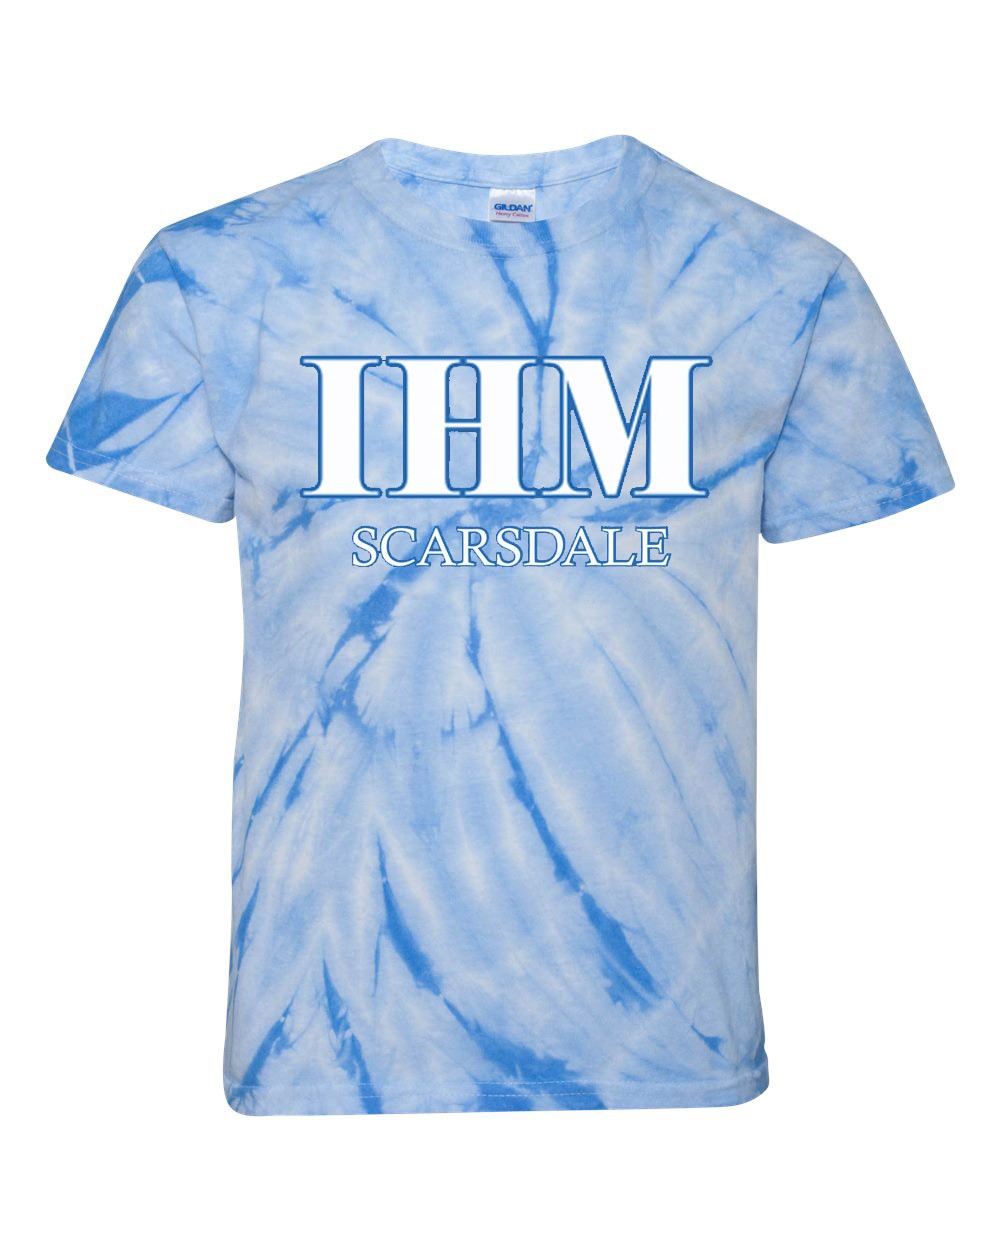 IHM Spirit S/S Tie Dye T-Shirt w/ IHM Scarsdale Logo - Please Allow 2-3 Weeks for Delivery